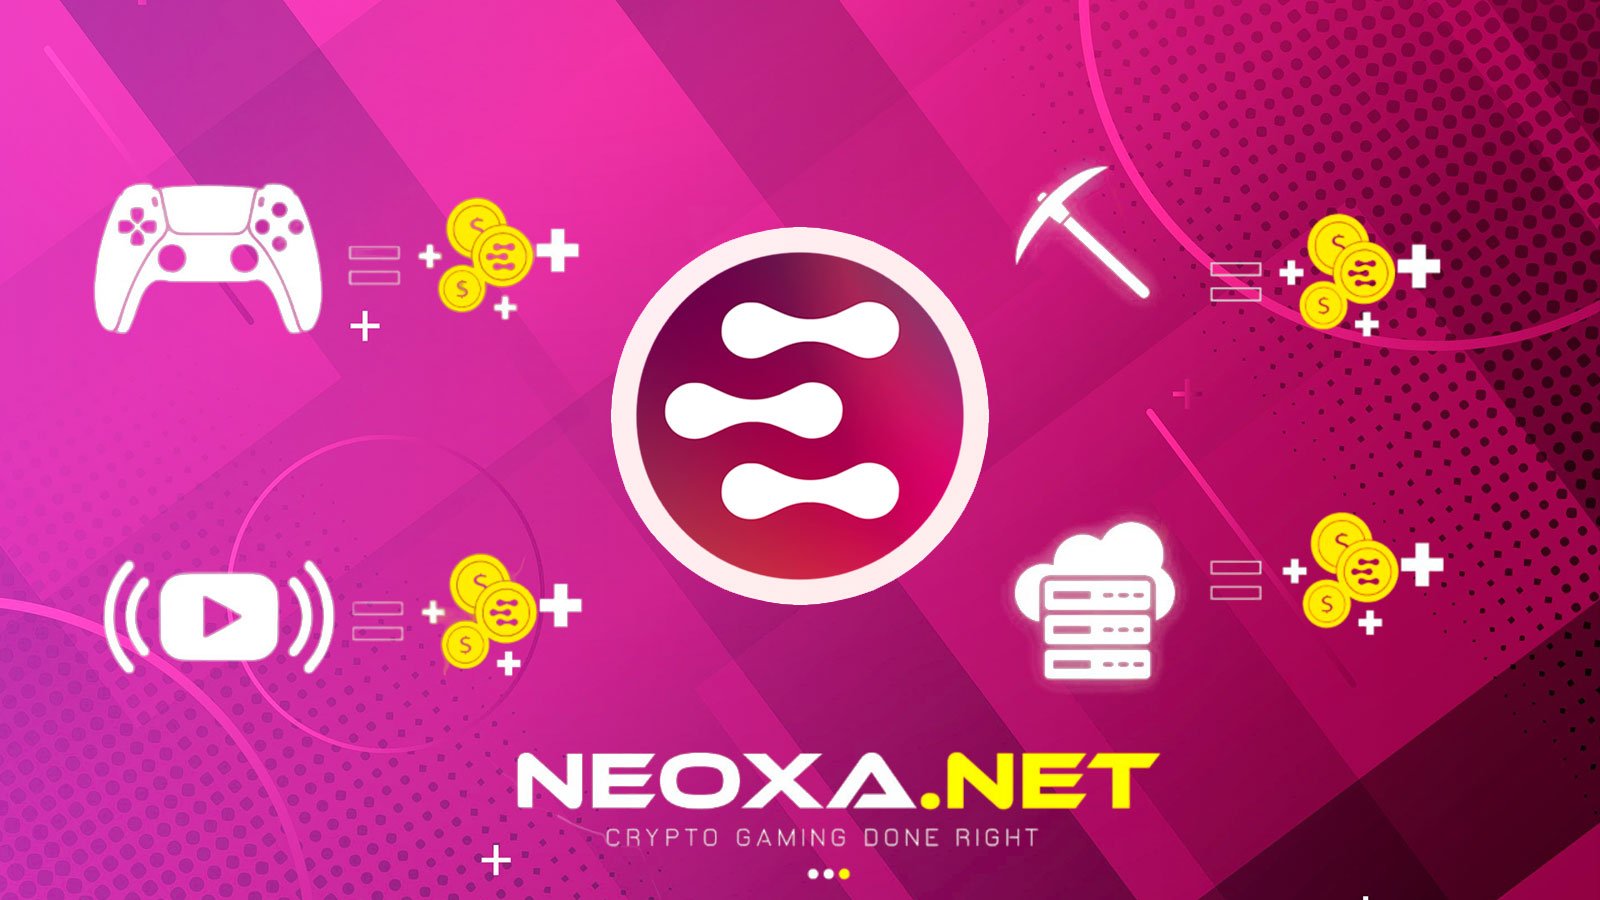 Neoxa.net The Future of Crypto Gaming